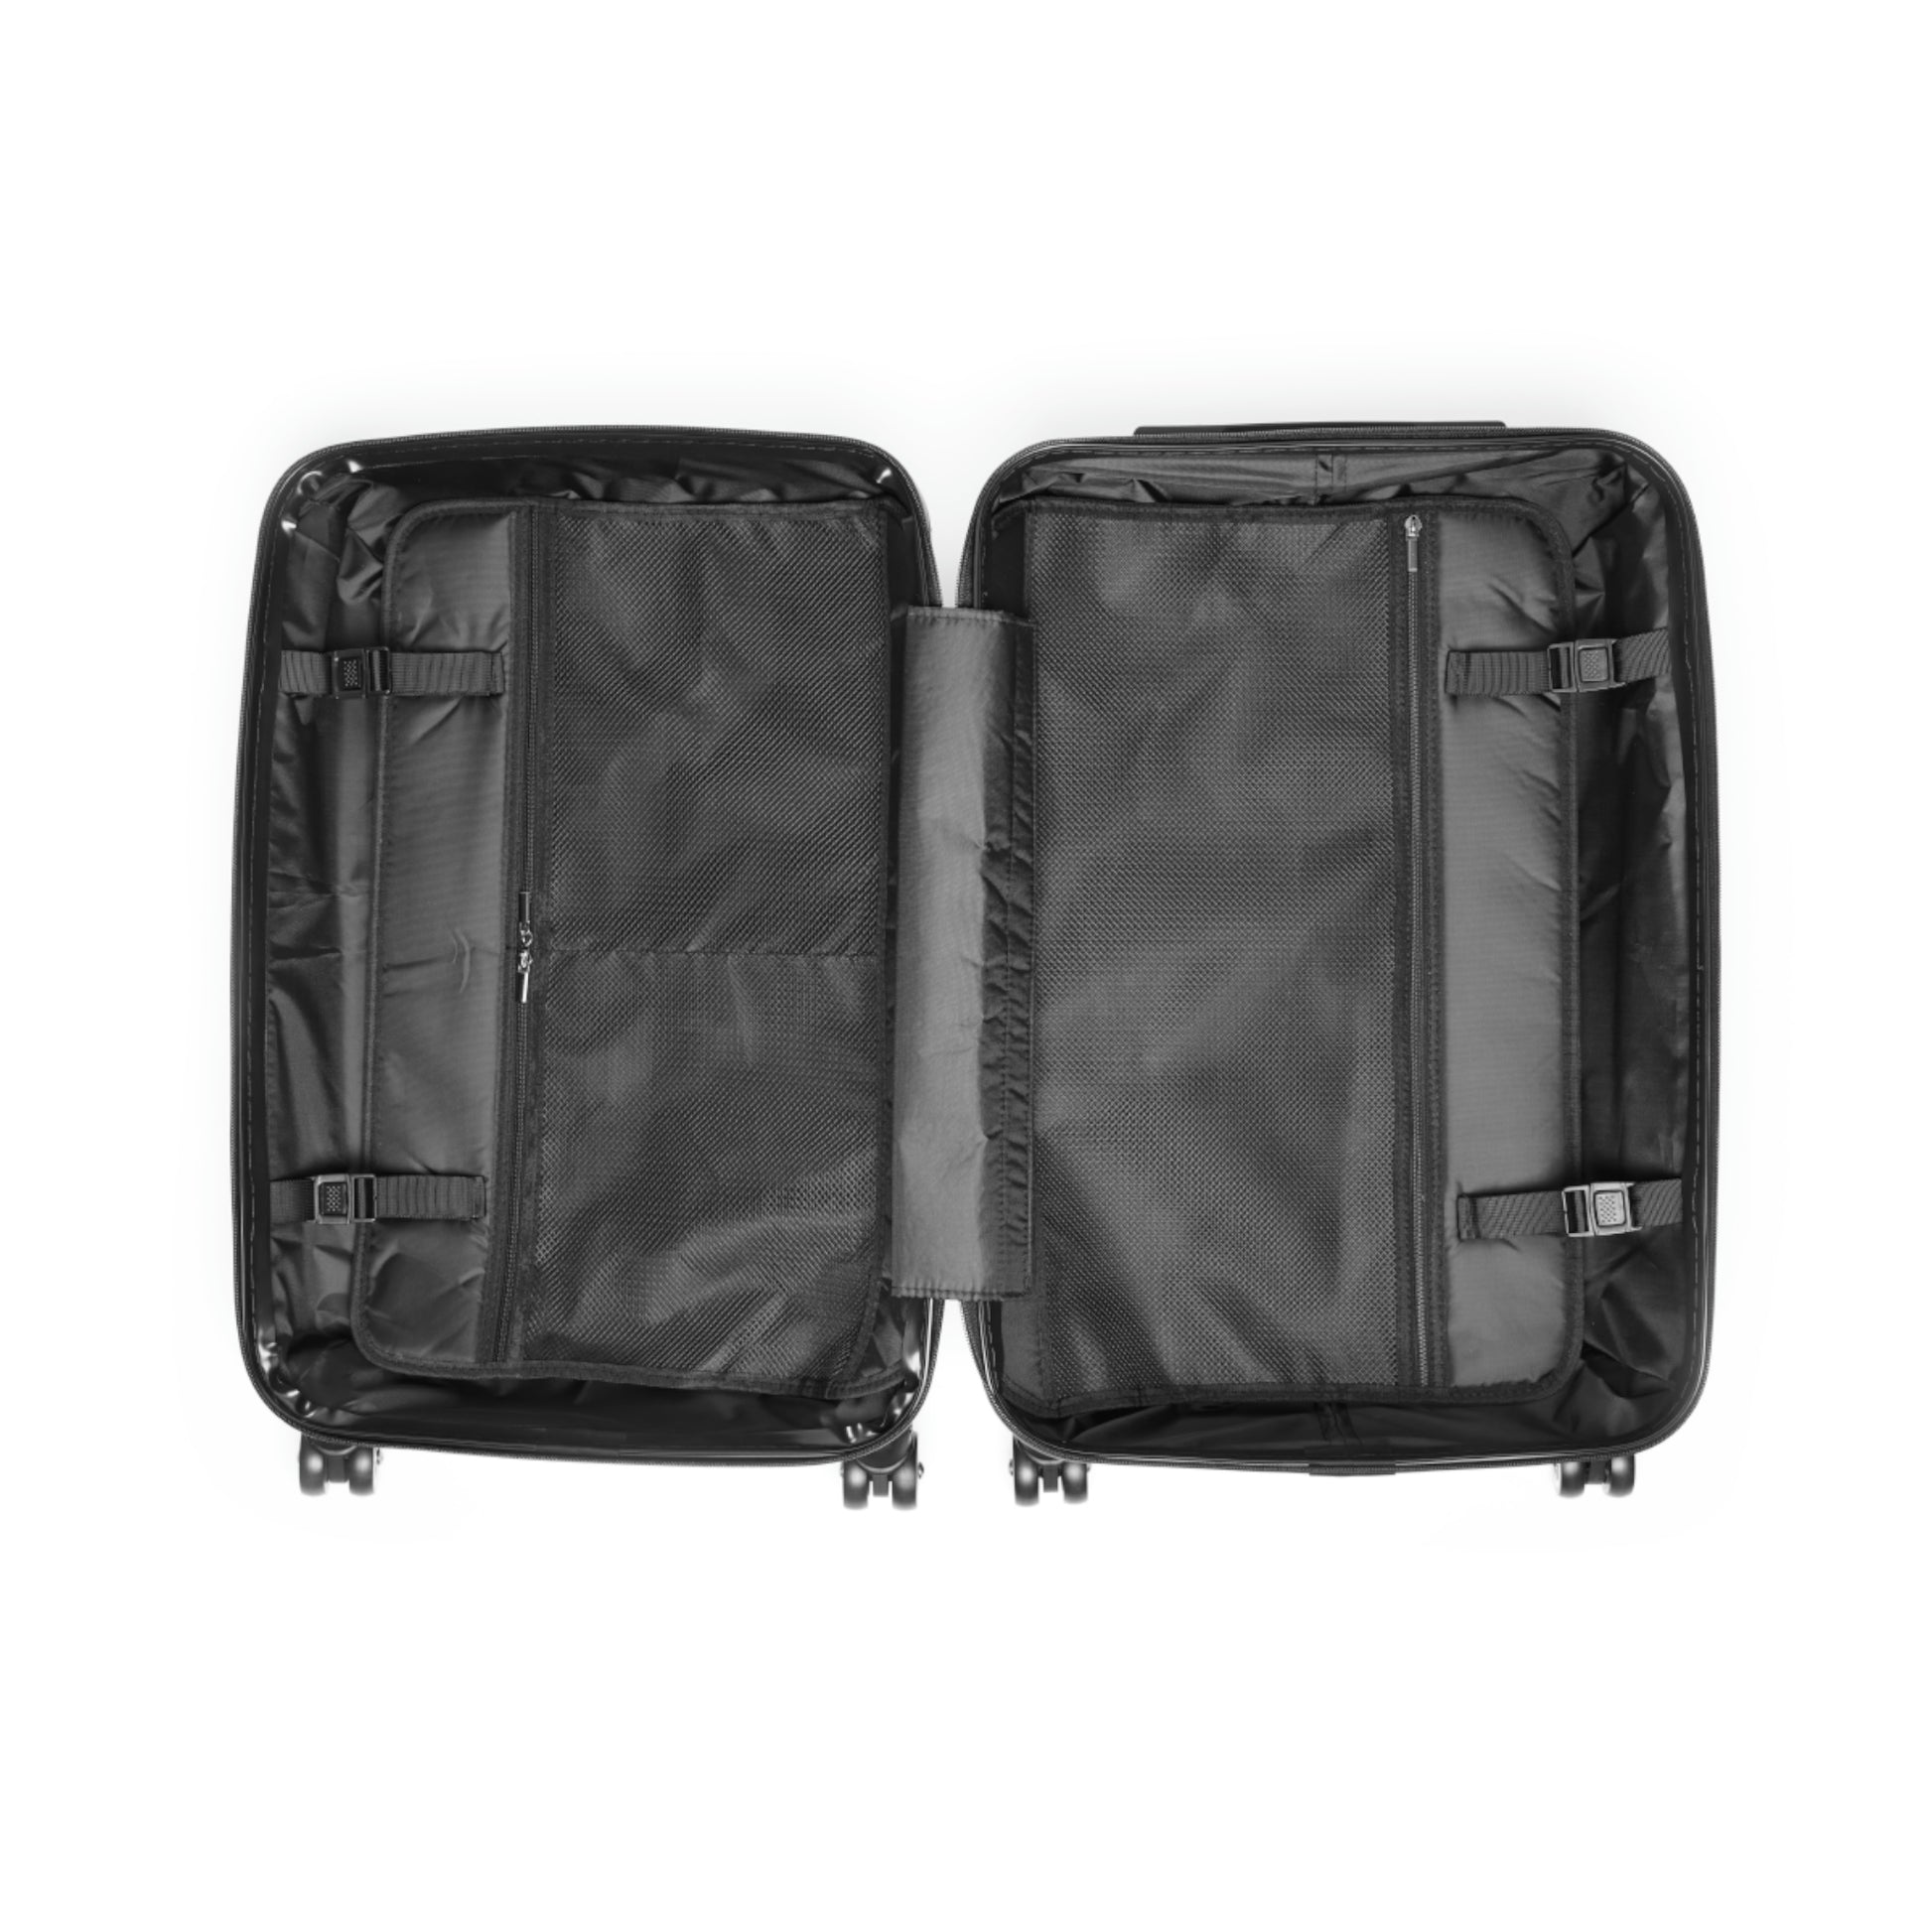 Geotrott Cincinnati Bengals National Football League NFL Team Logo Cabin Suitcase Rolling Luggage Checking Bag